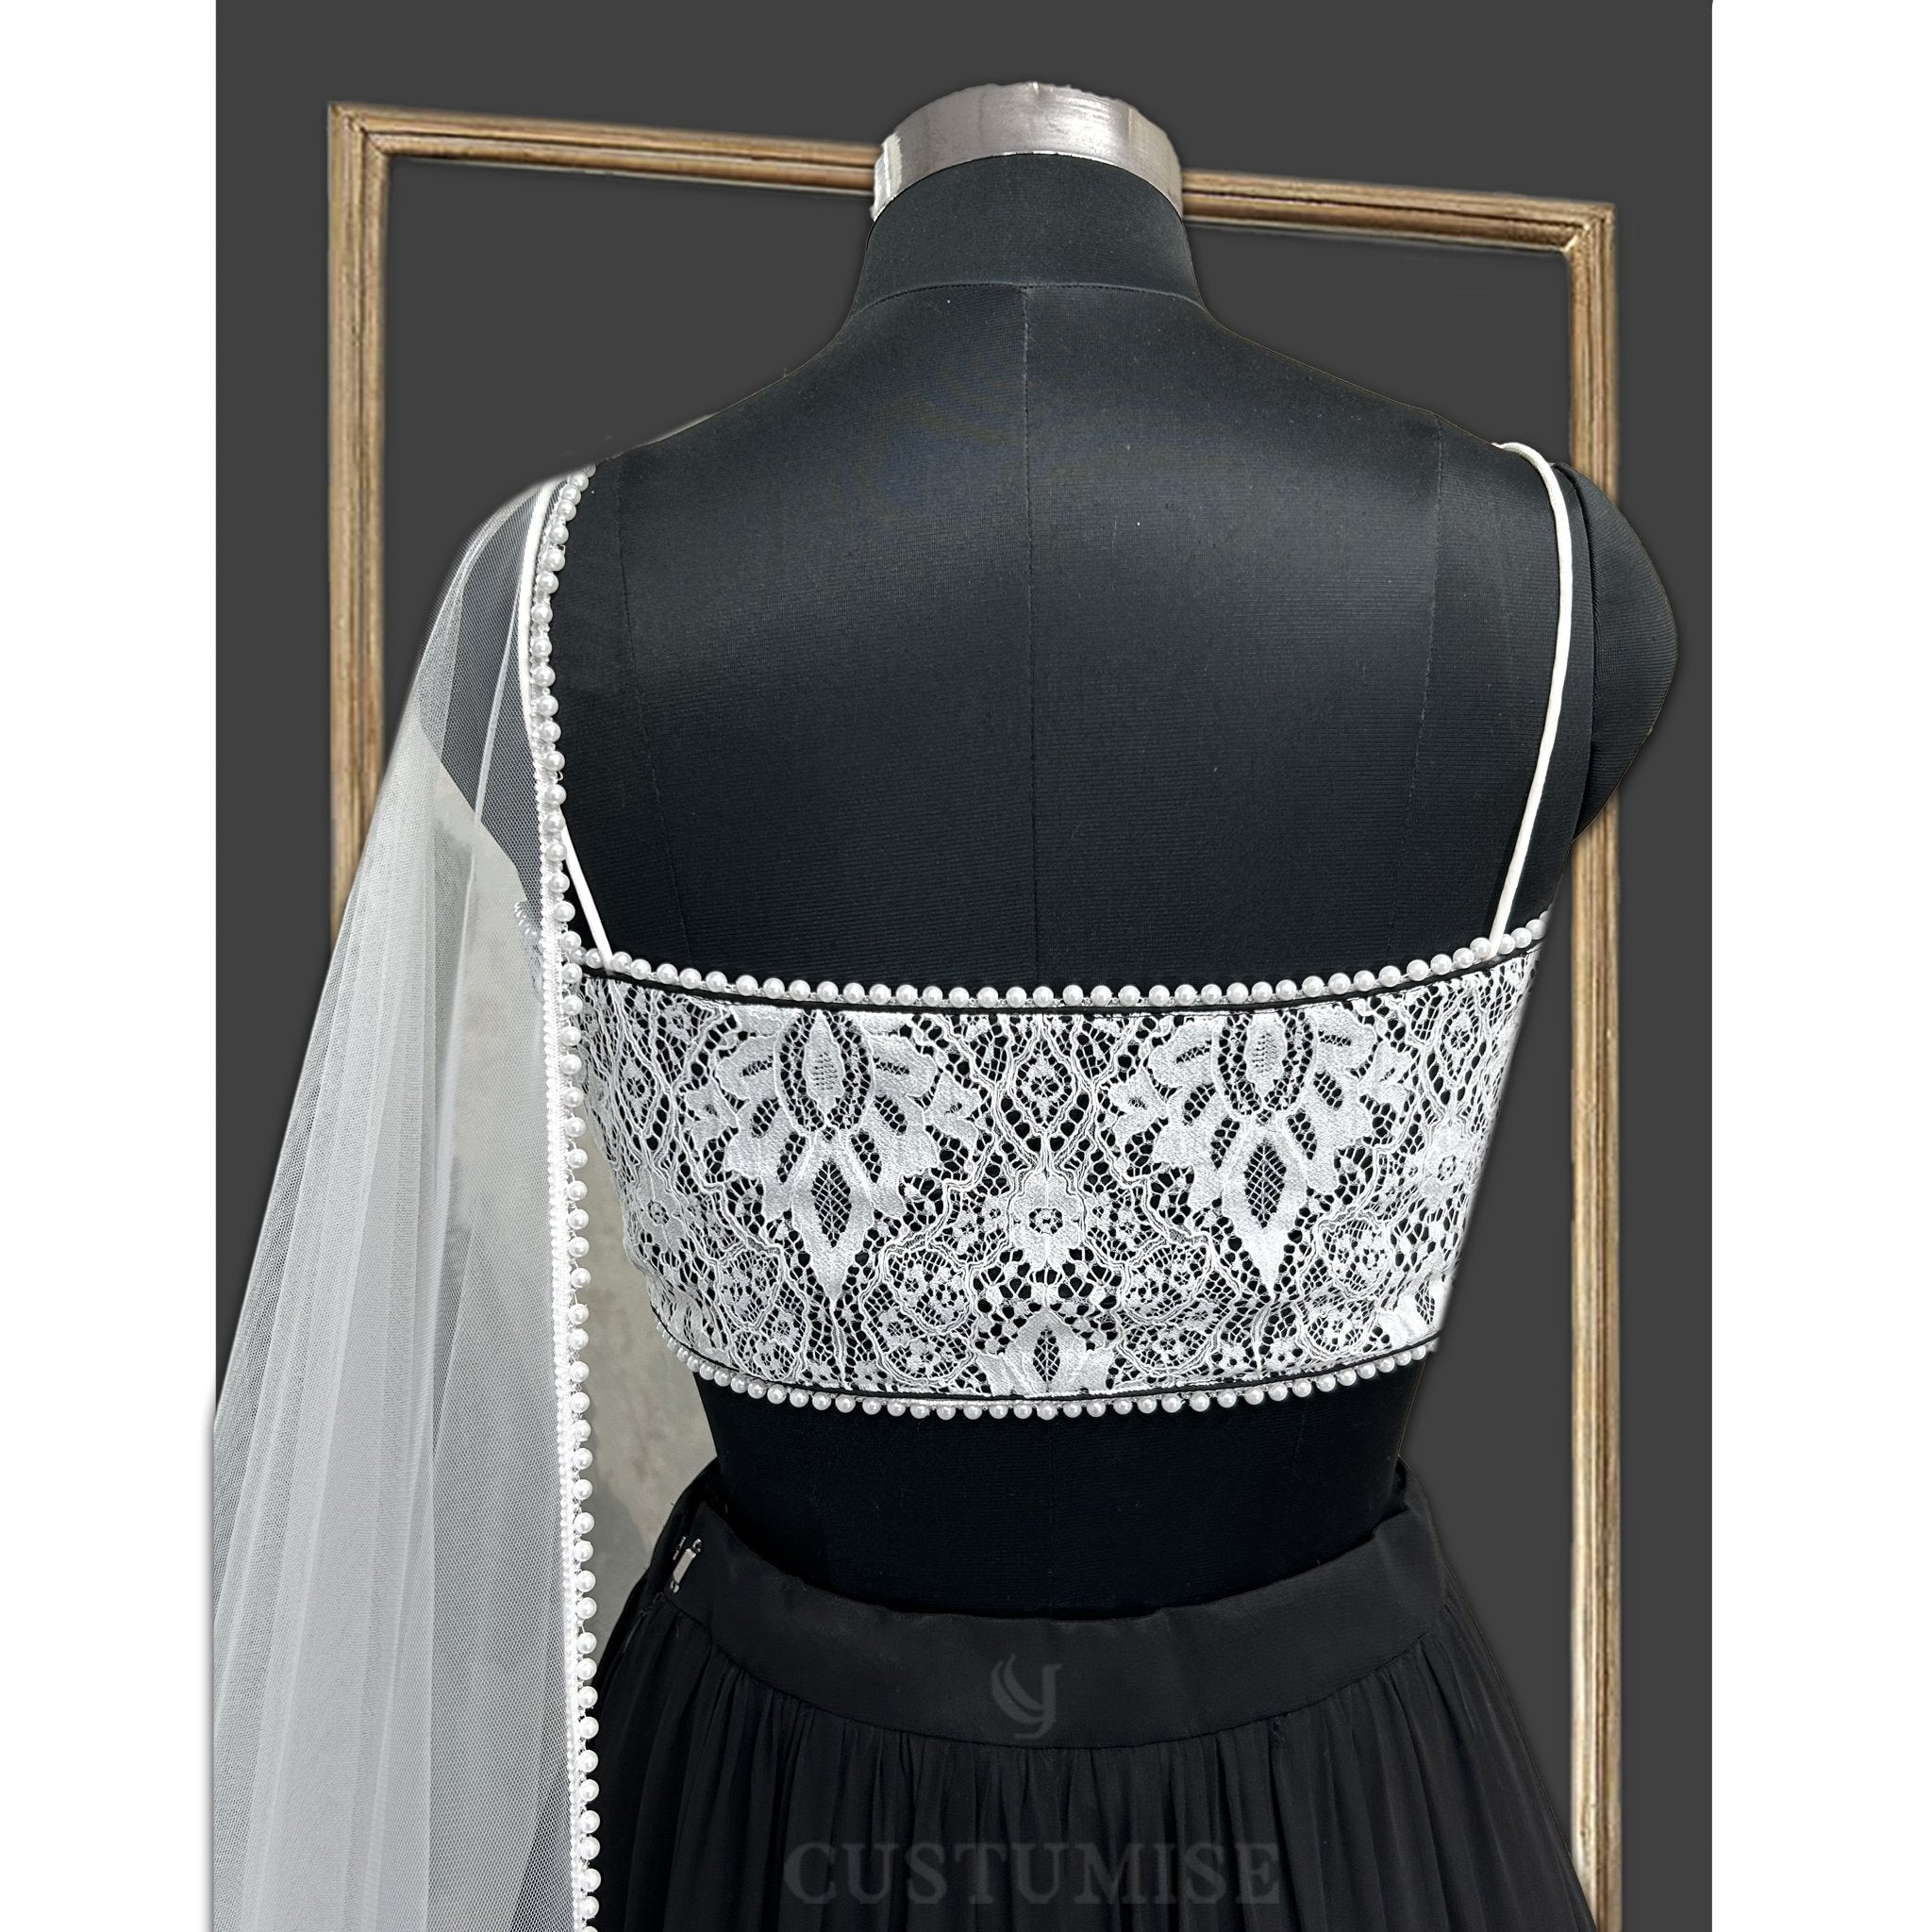 Chic Black & White Chevron Lehenga Set - Indian Designer Bridal Wedding Outfit